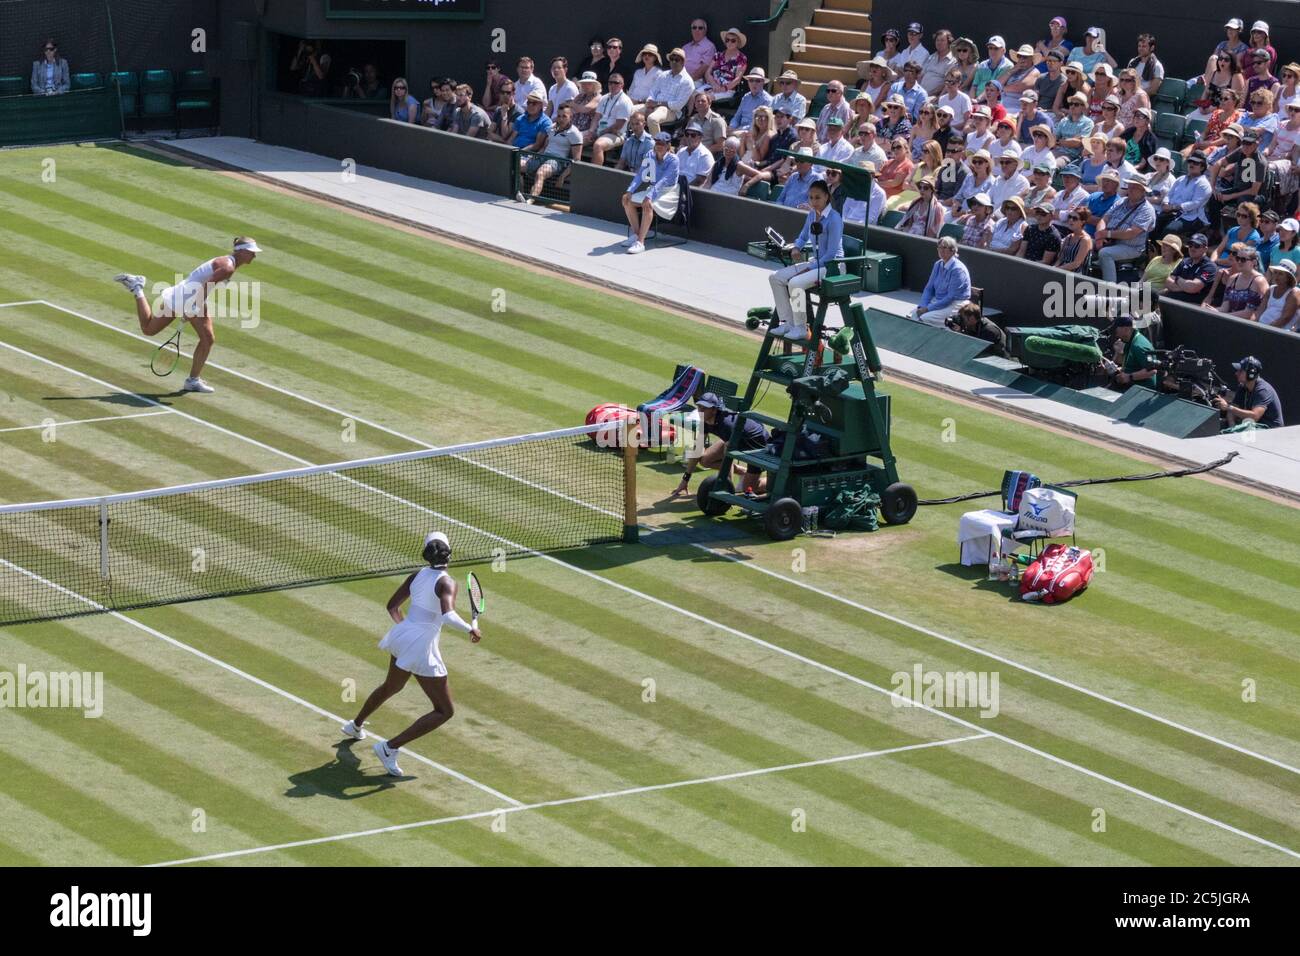 American Tennis player Venus Williams in a match against Kiki Mertens, The Championships 2018, Wimbledon All England Lawn Tennis Club, London, UK Stock Photo